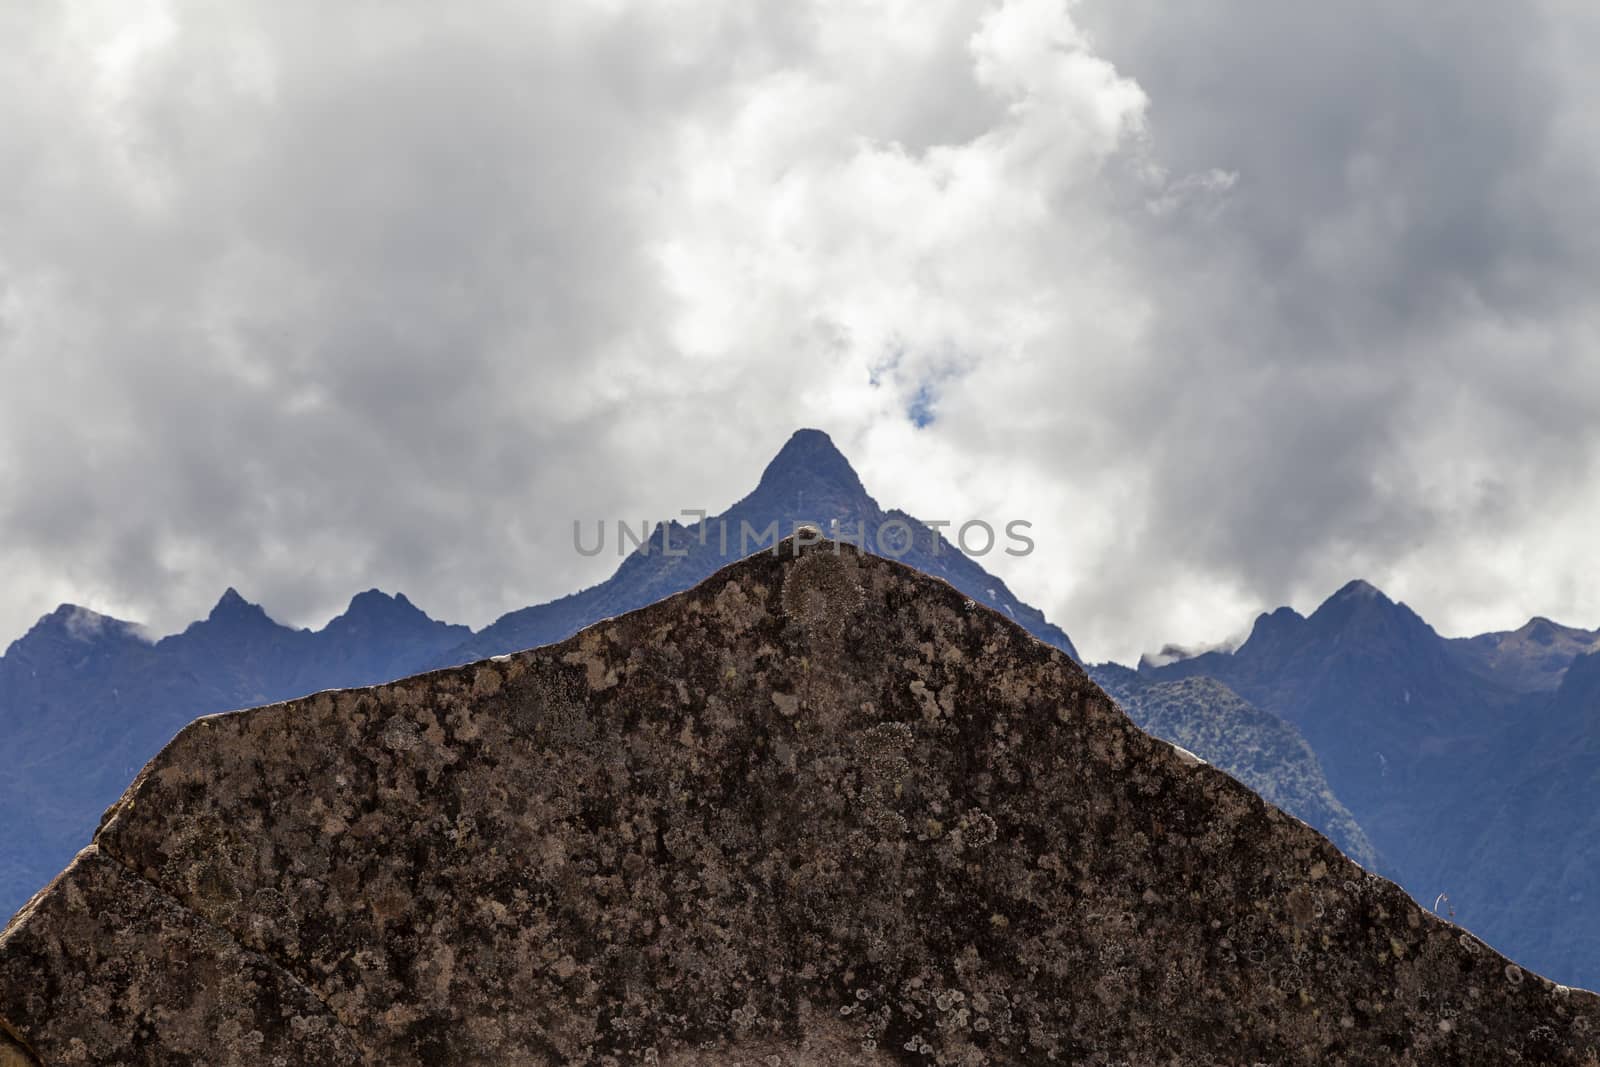 Machu Picchu, Peru - April 6, 2014: The sacred rock and monolith of Machu Picchu, silhouetted against the mountain line, Peru.